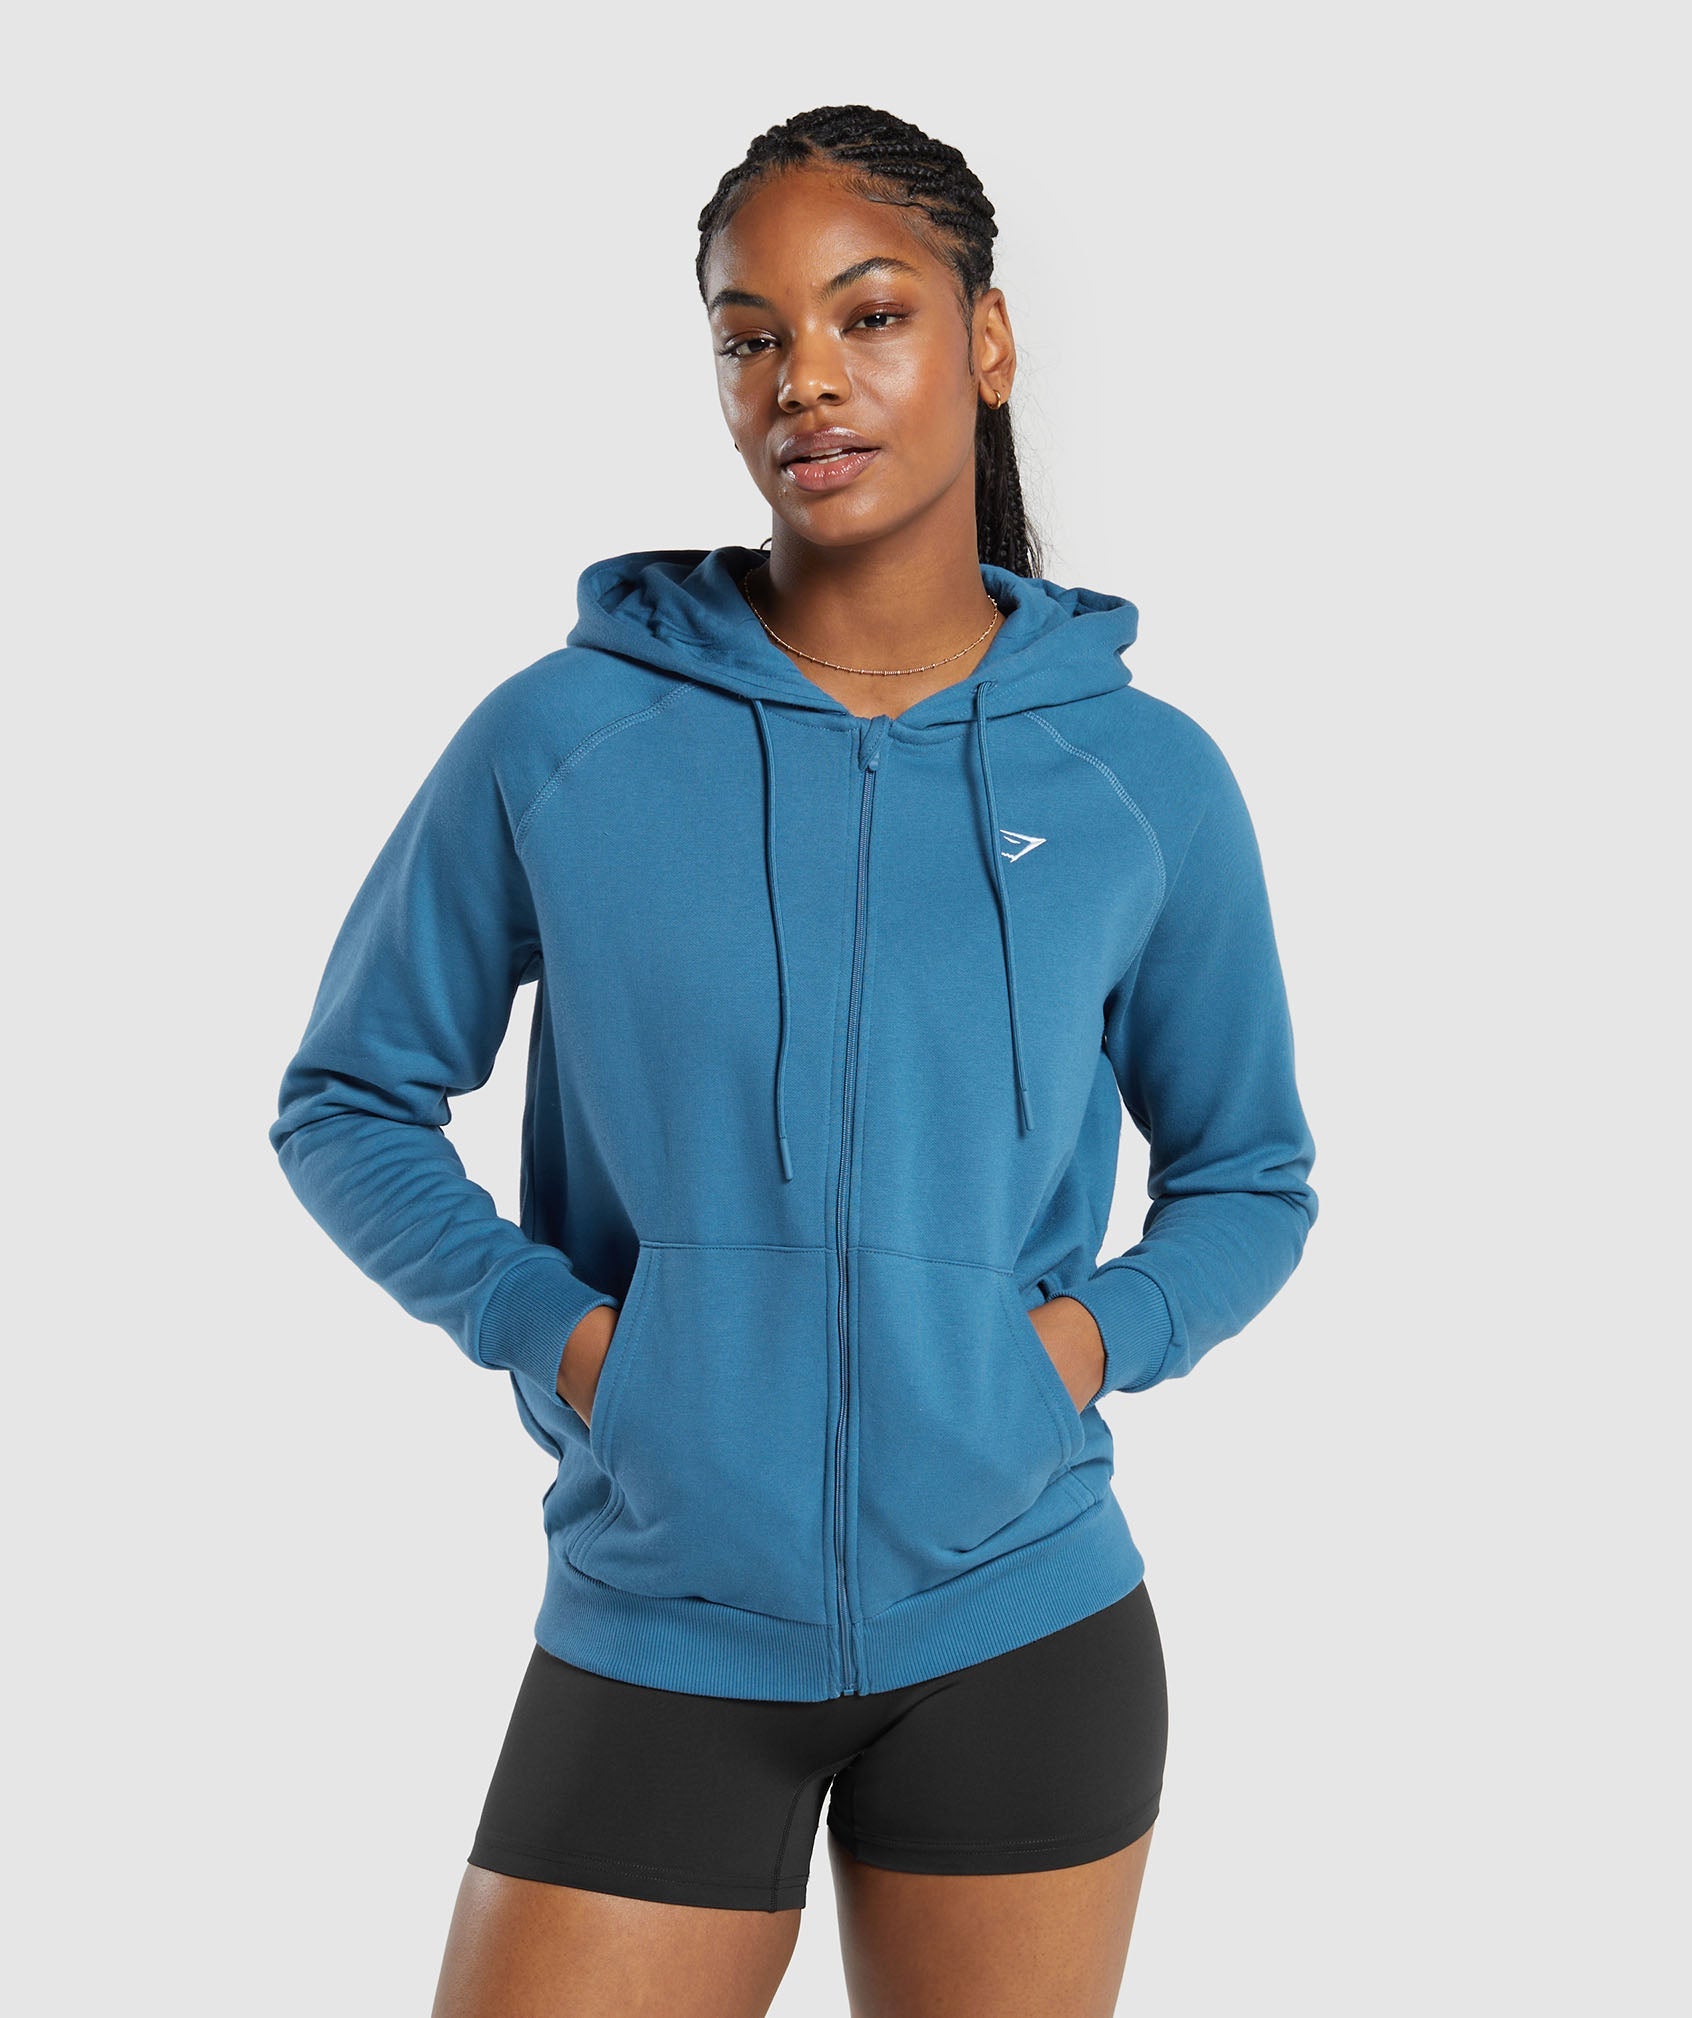 Gymshark Full Zip Hoodie Sweatshirt Gray Color Block Panels Womens Small